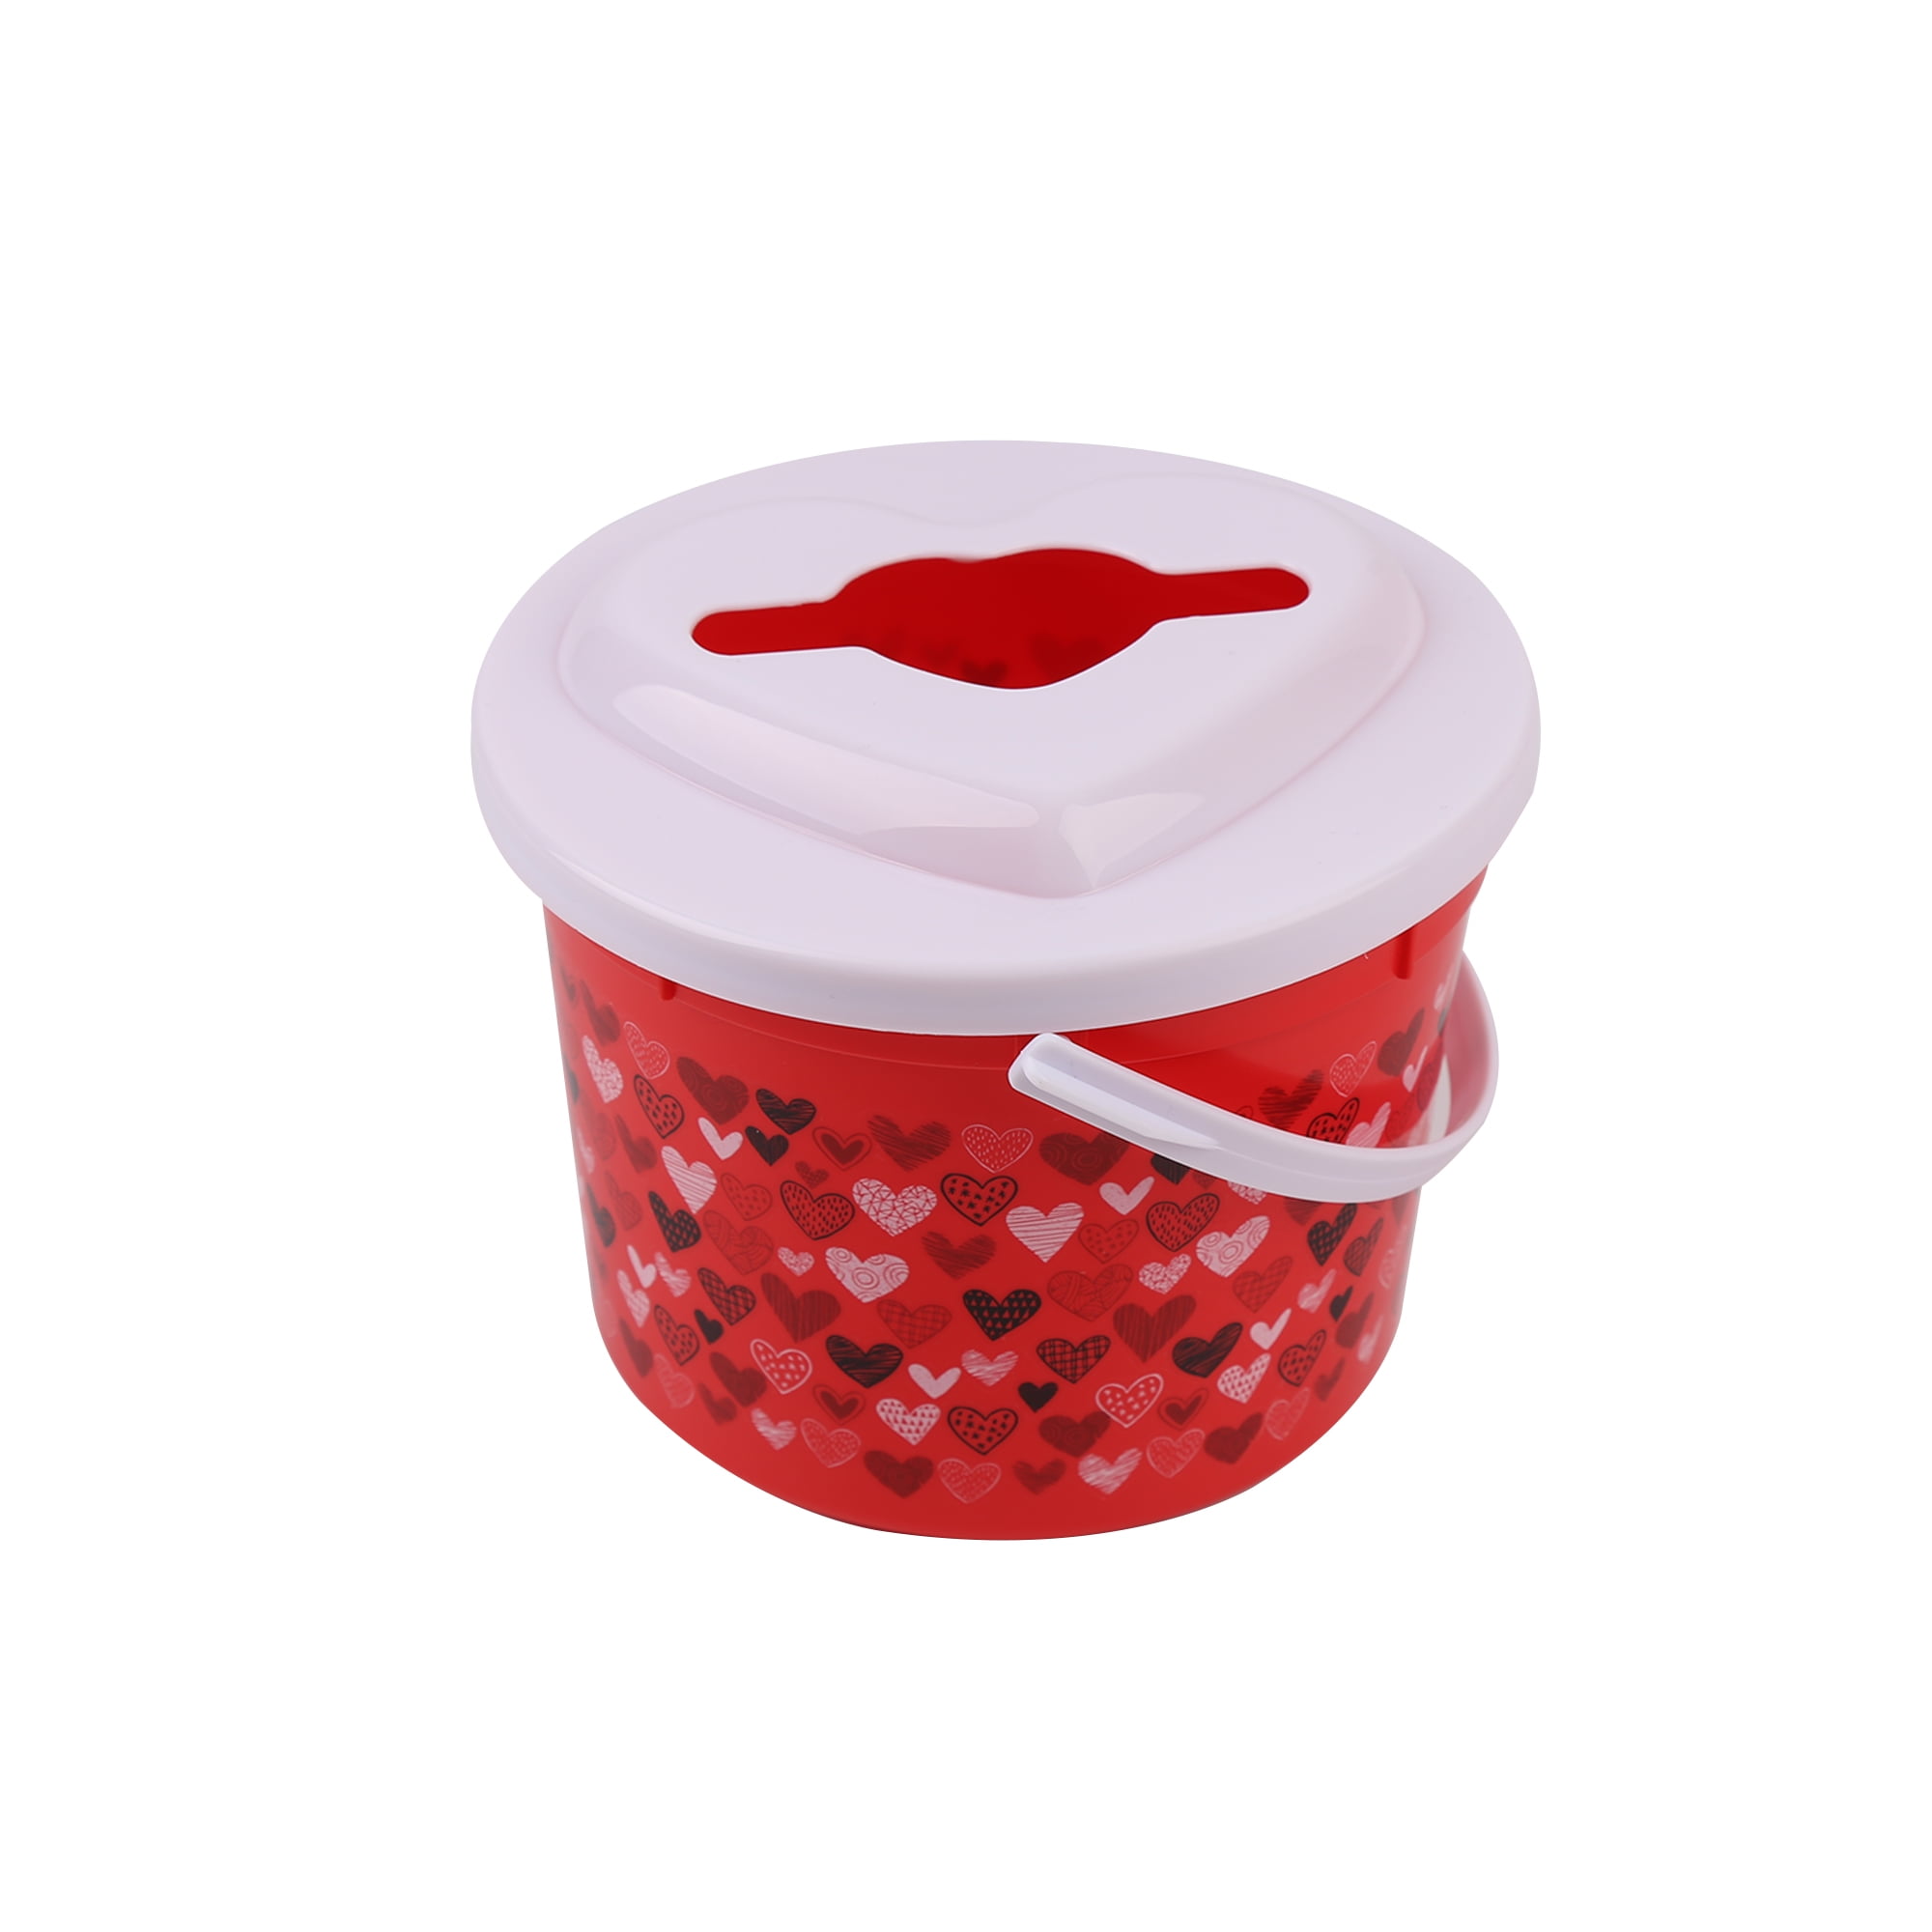 WAY TO CELEBRATE! Way to Celebrate Plastic Bucket Red, Plastic, Valentine's Day